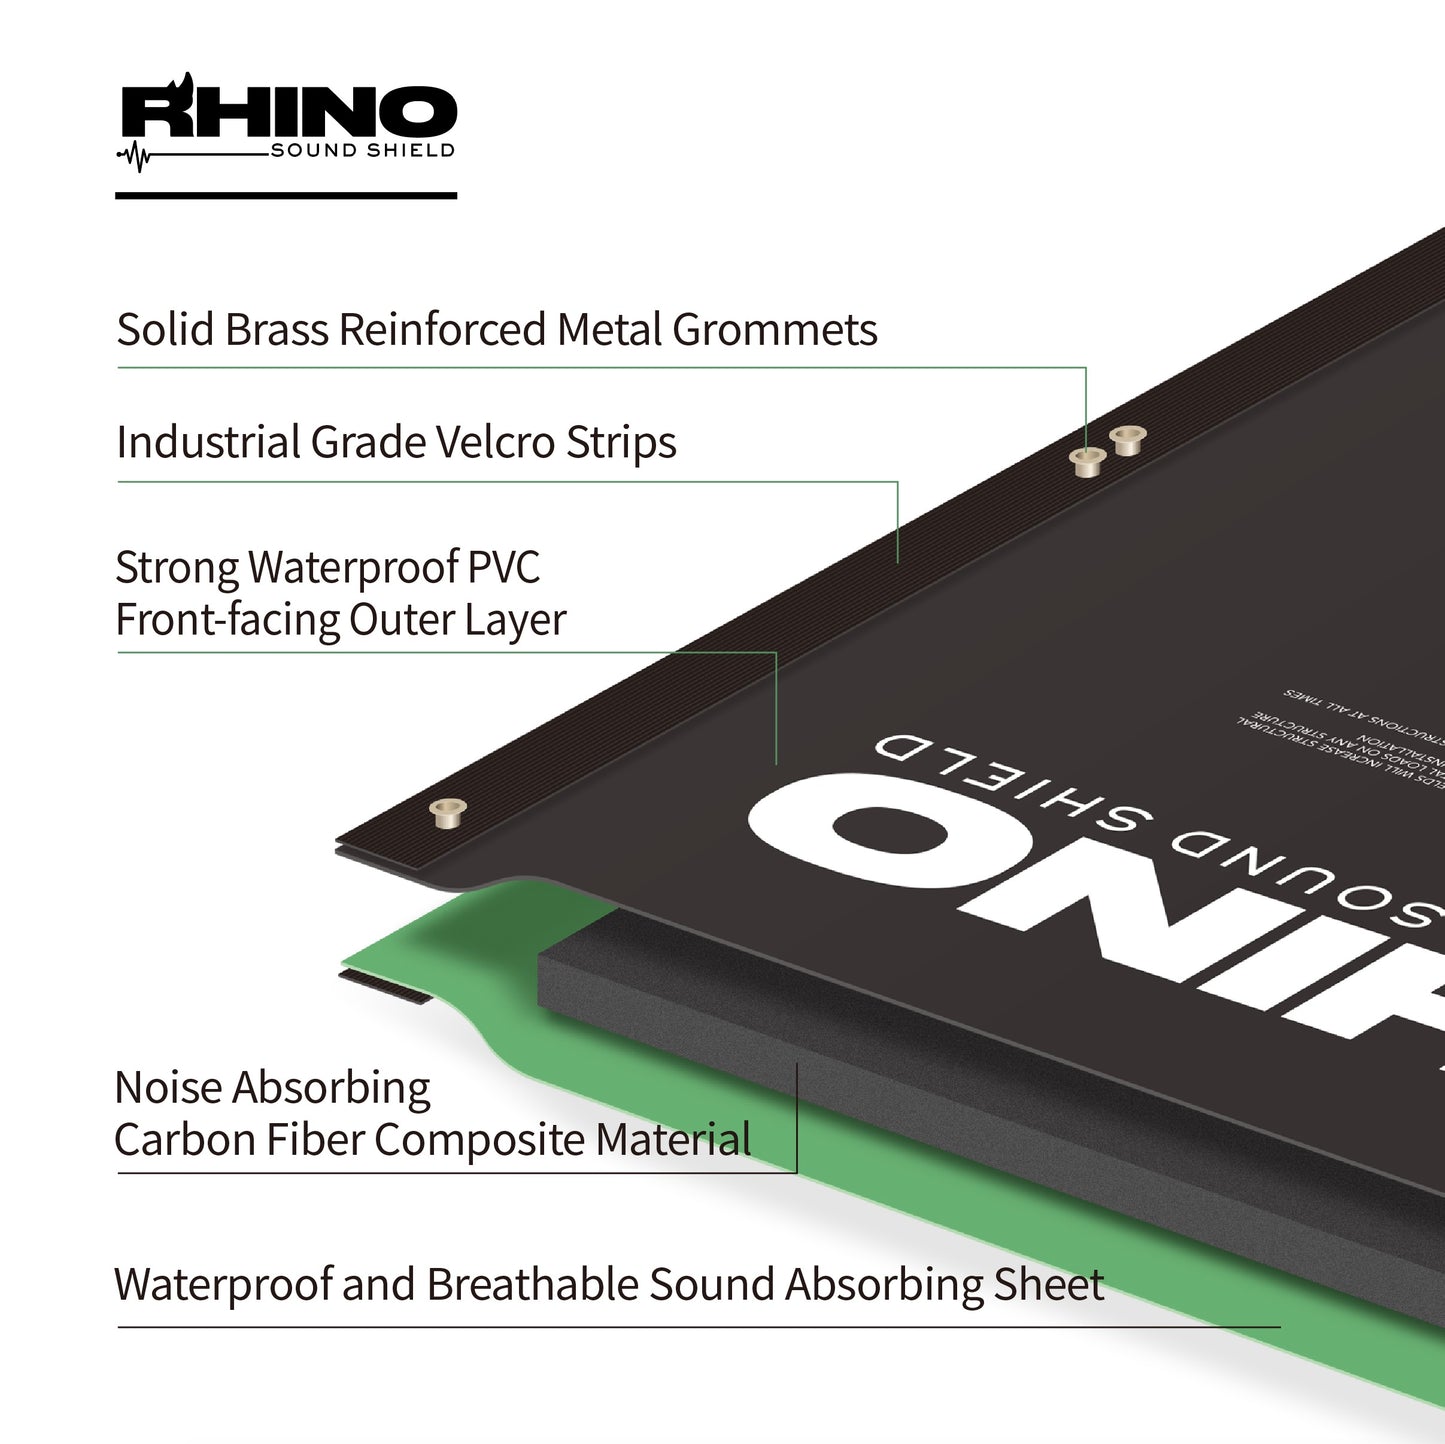 RHINO Sound Shield